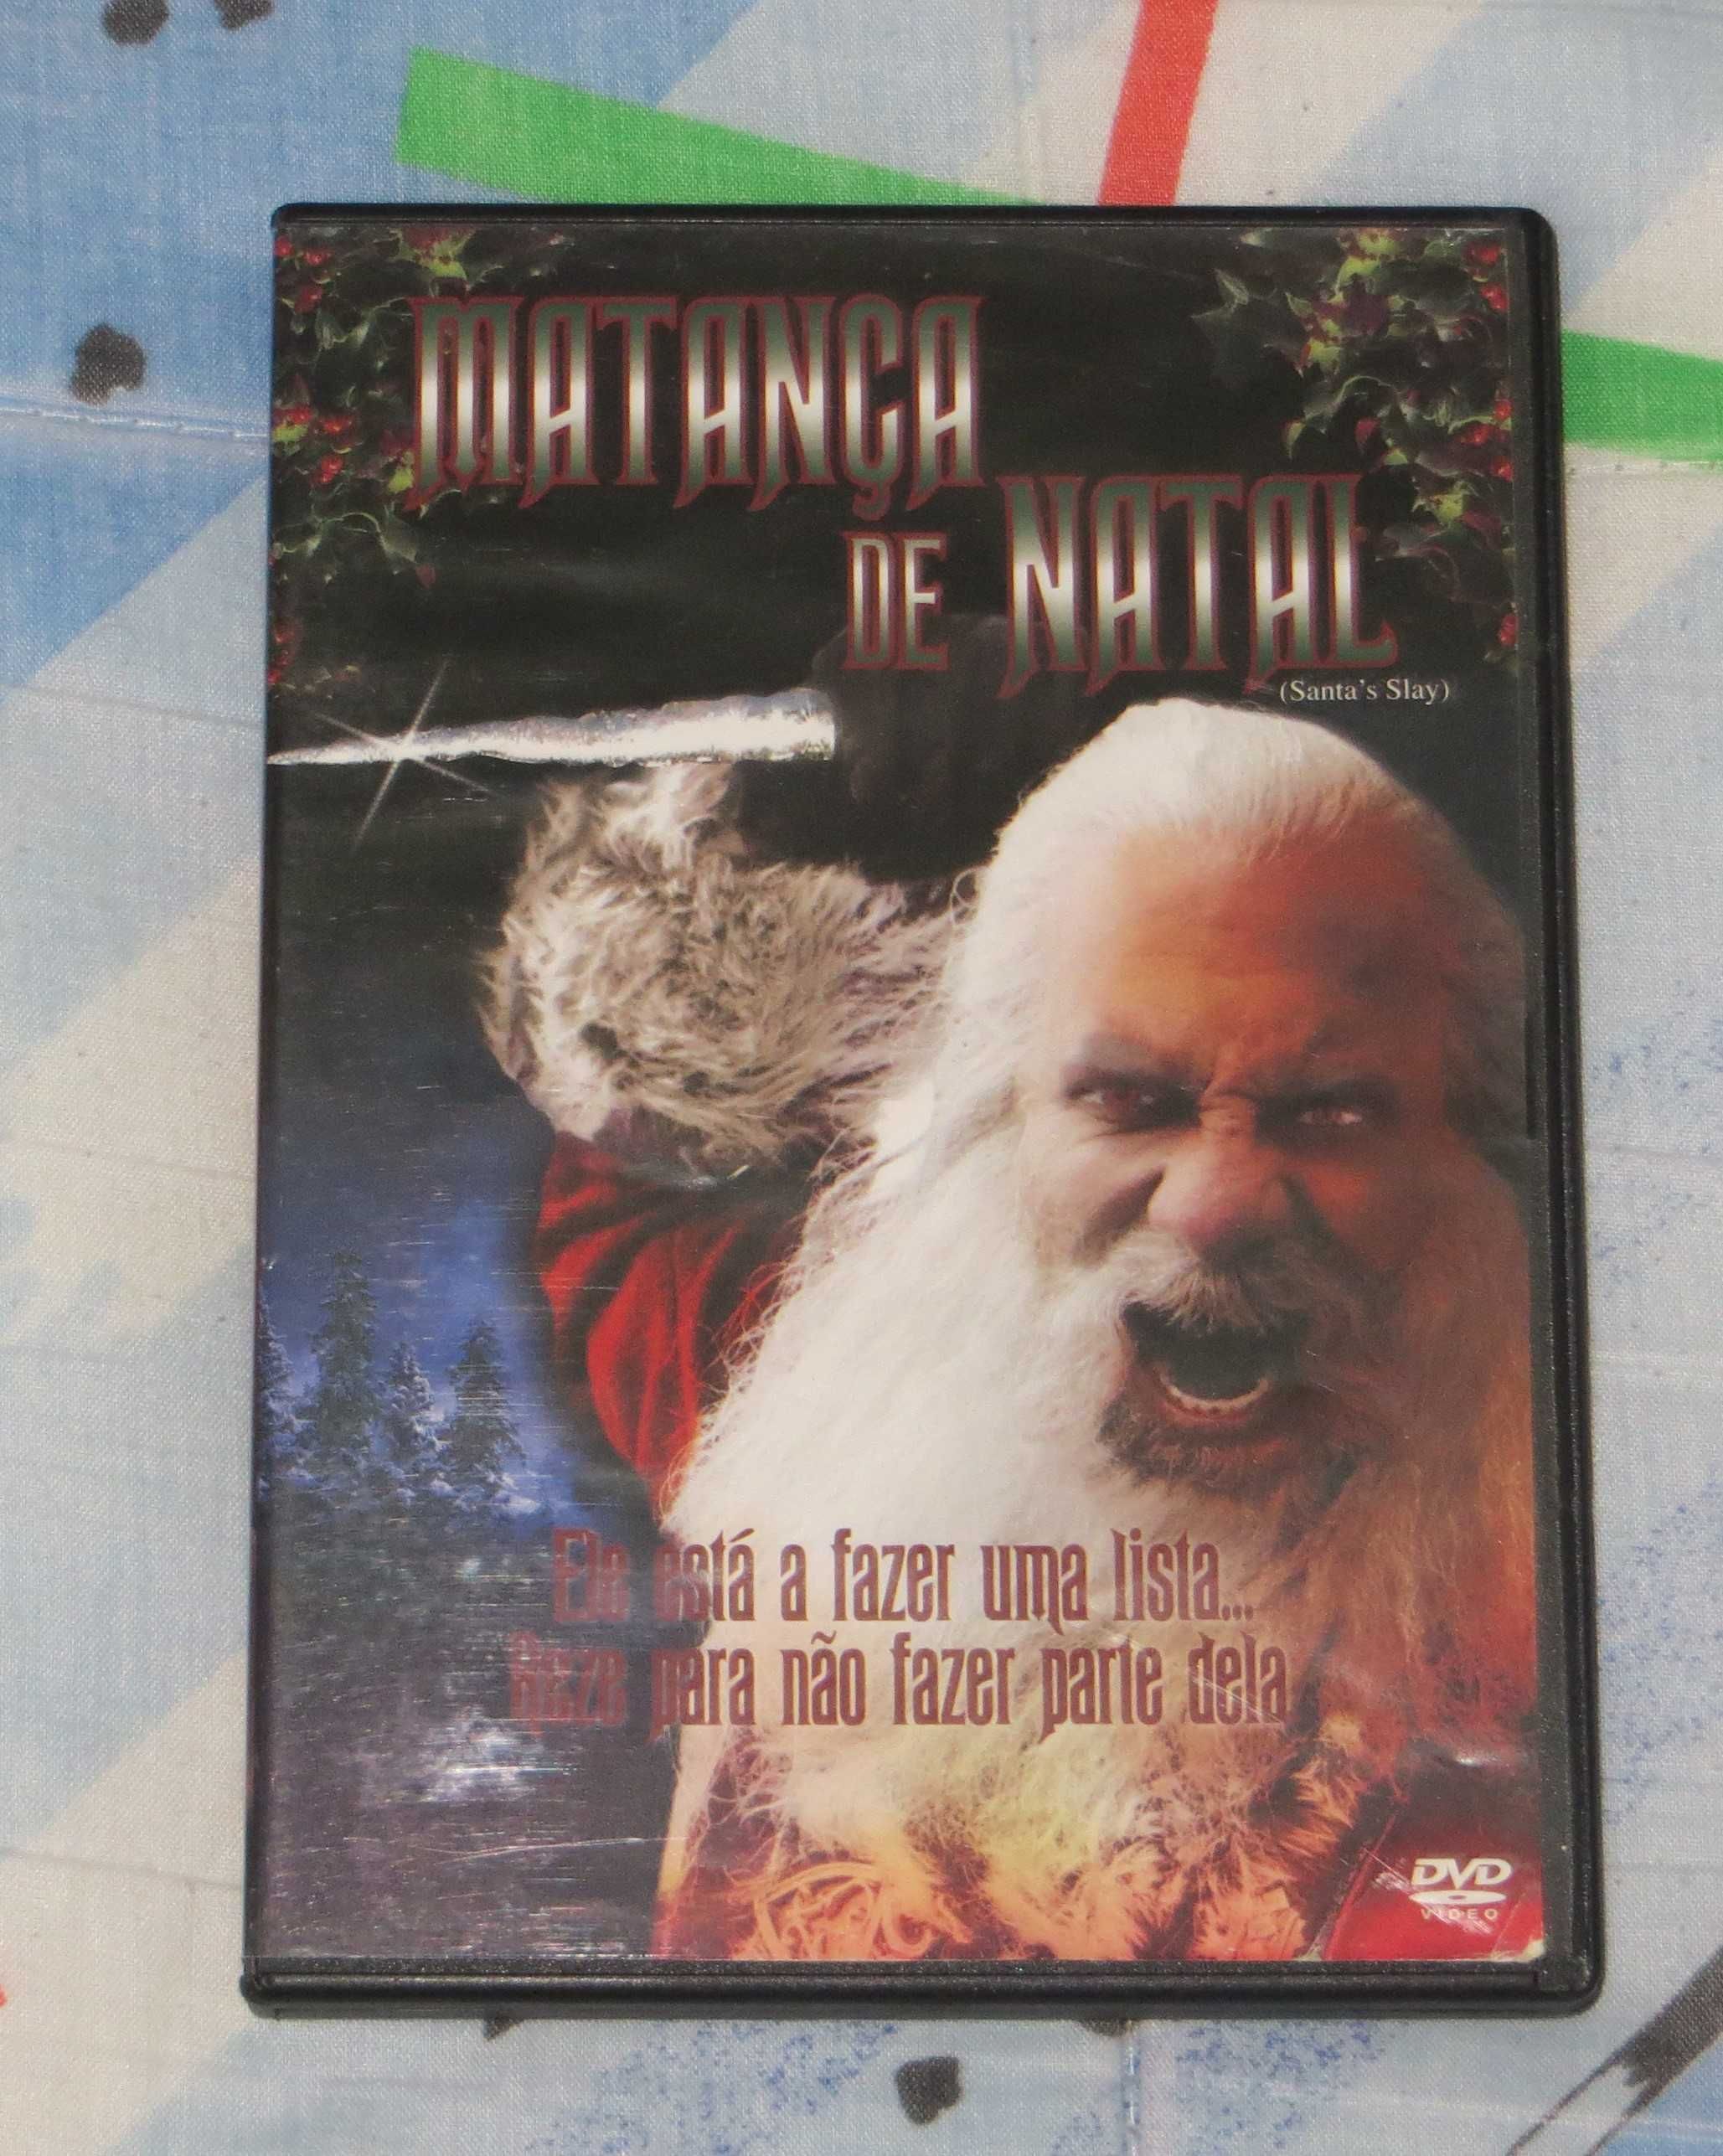 Matança de Natal [DVD]